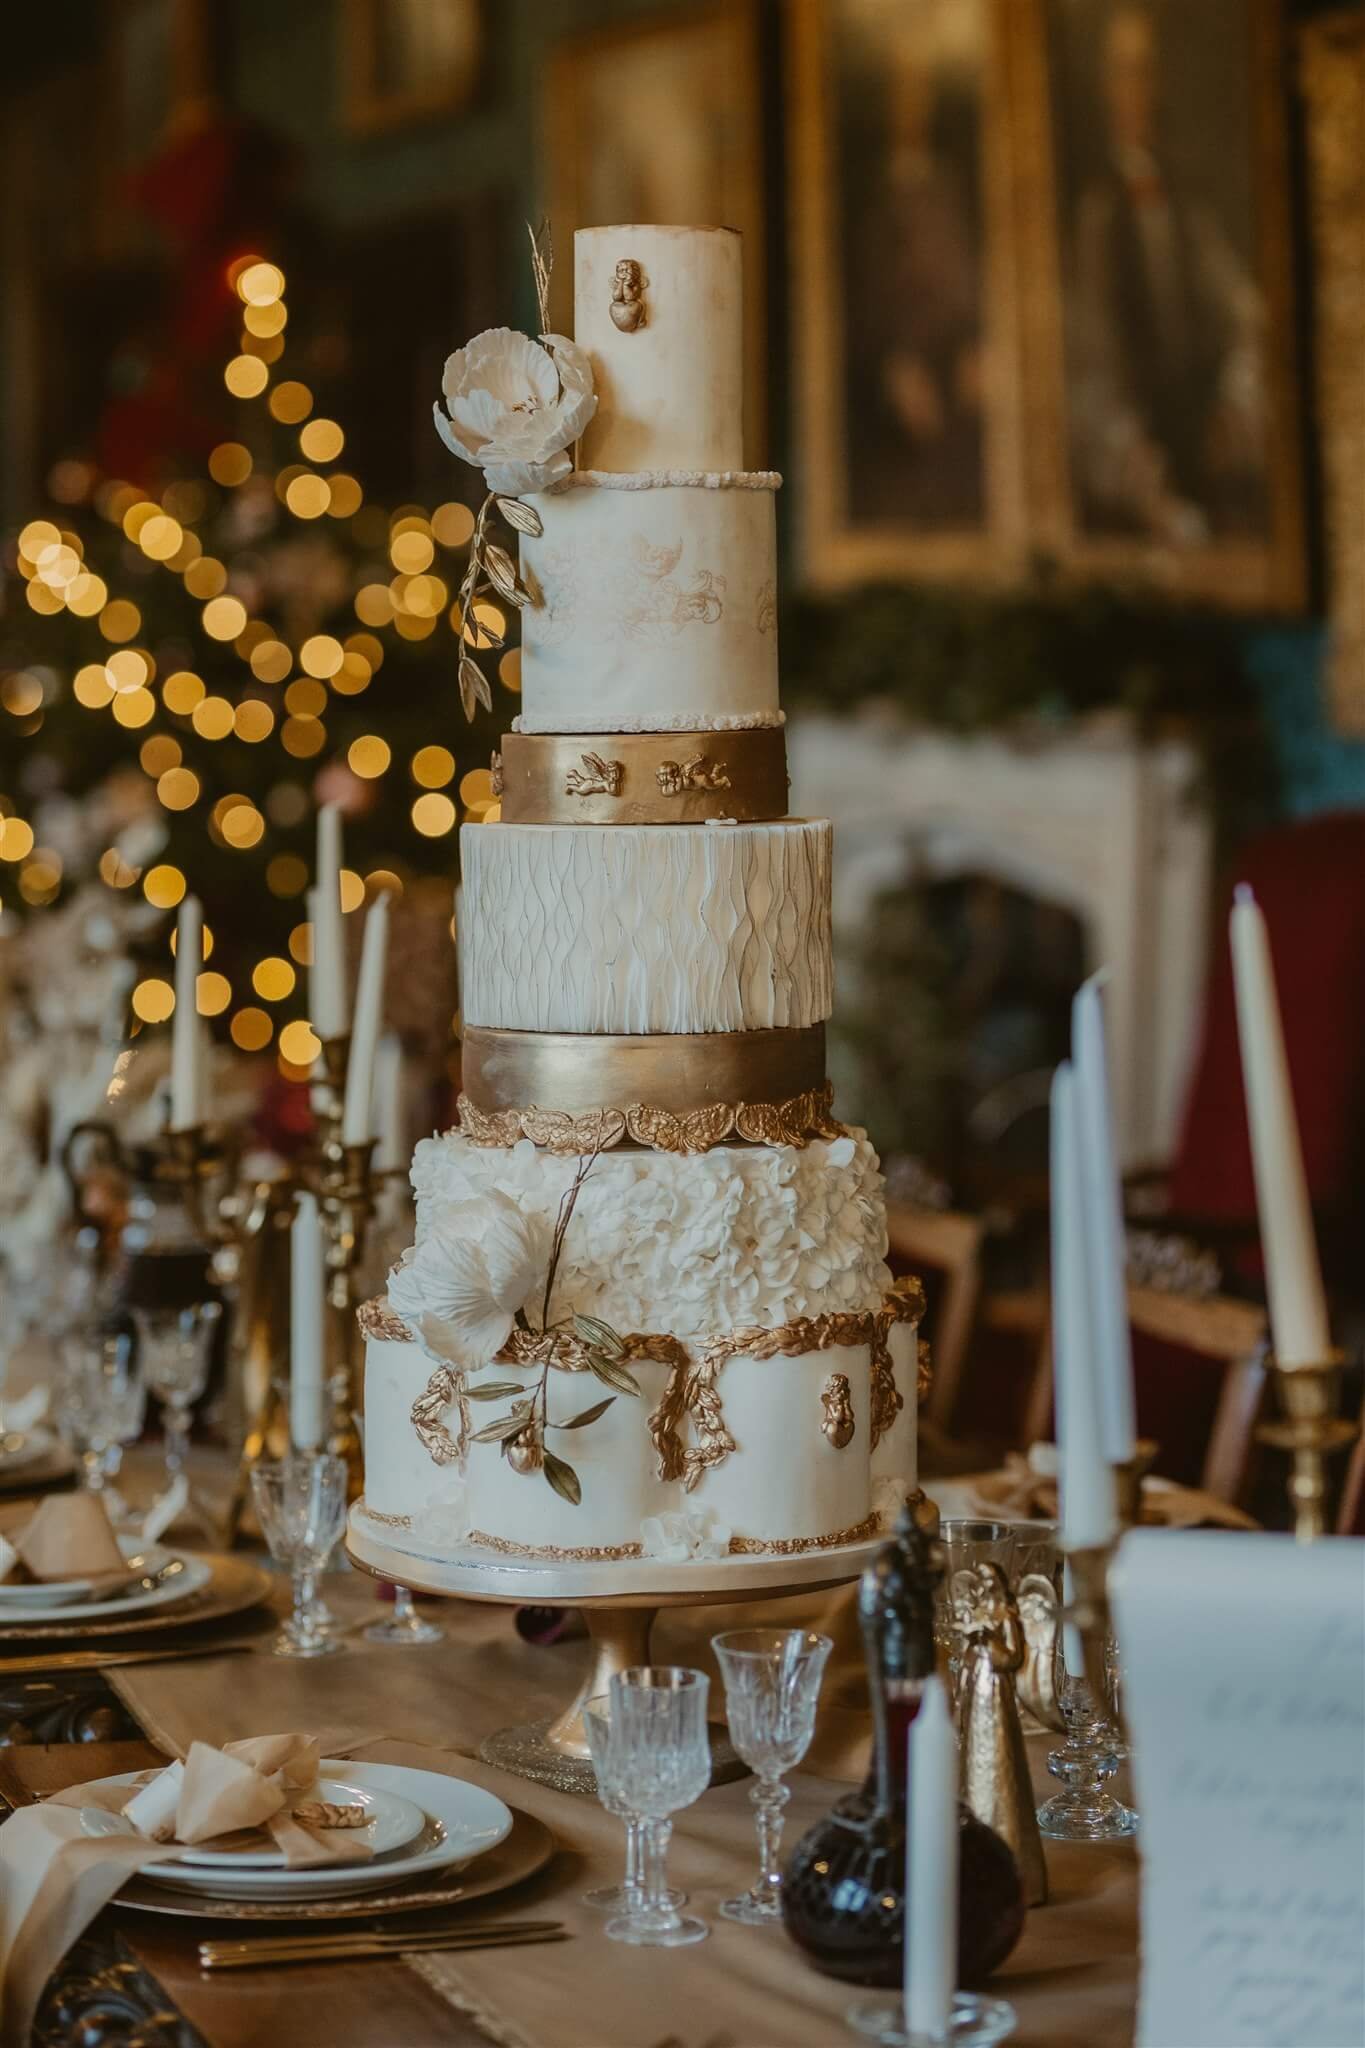 White and gold wedding cake